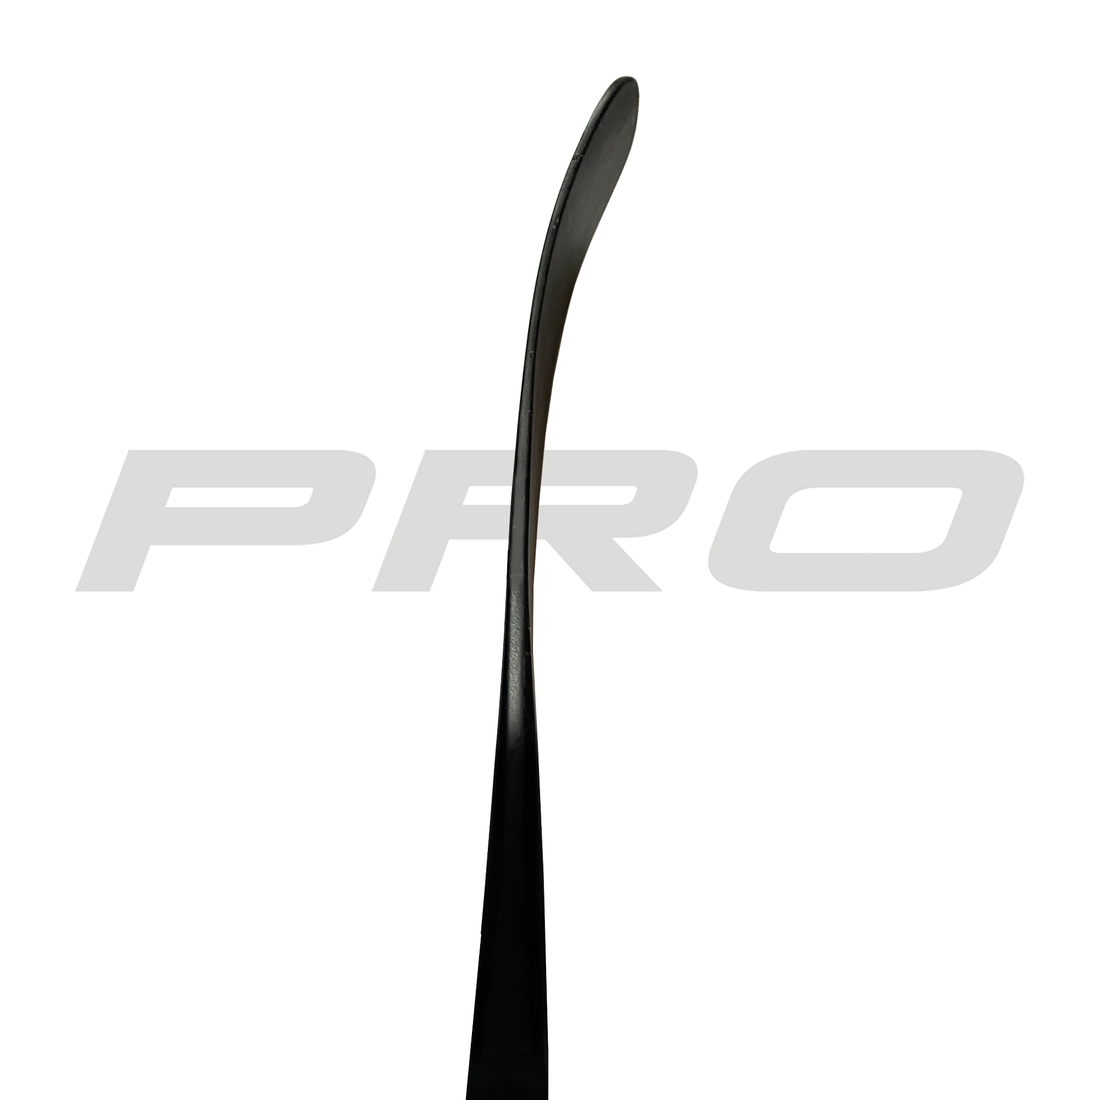 PRO71 (ST: Malkin Pro) - Third Line (425 G) - Pro Stock Hockey Stick - Left